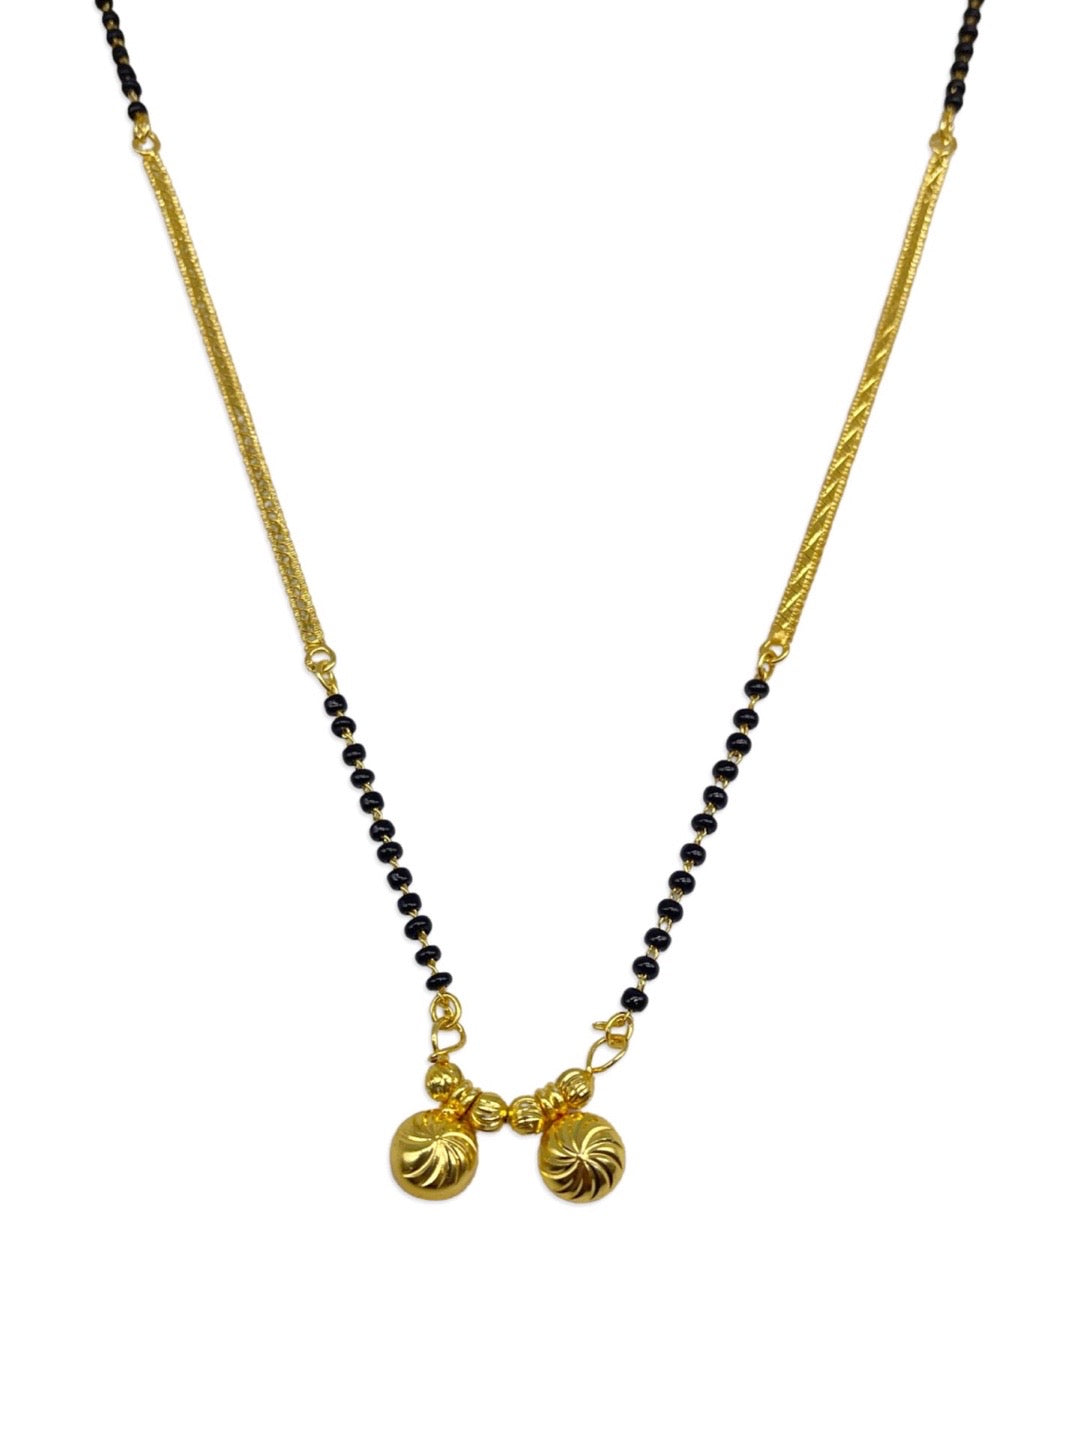 Short Mangalsutra Designs Gold Plated Latest 2 Vati Pendant Single Layer Gold Chain Mangalsutra